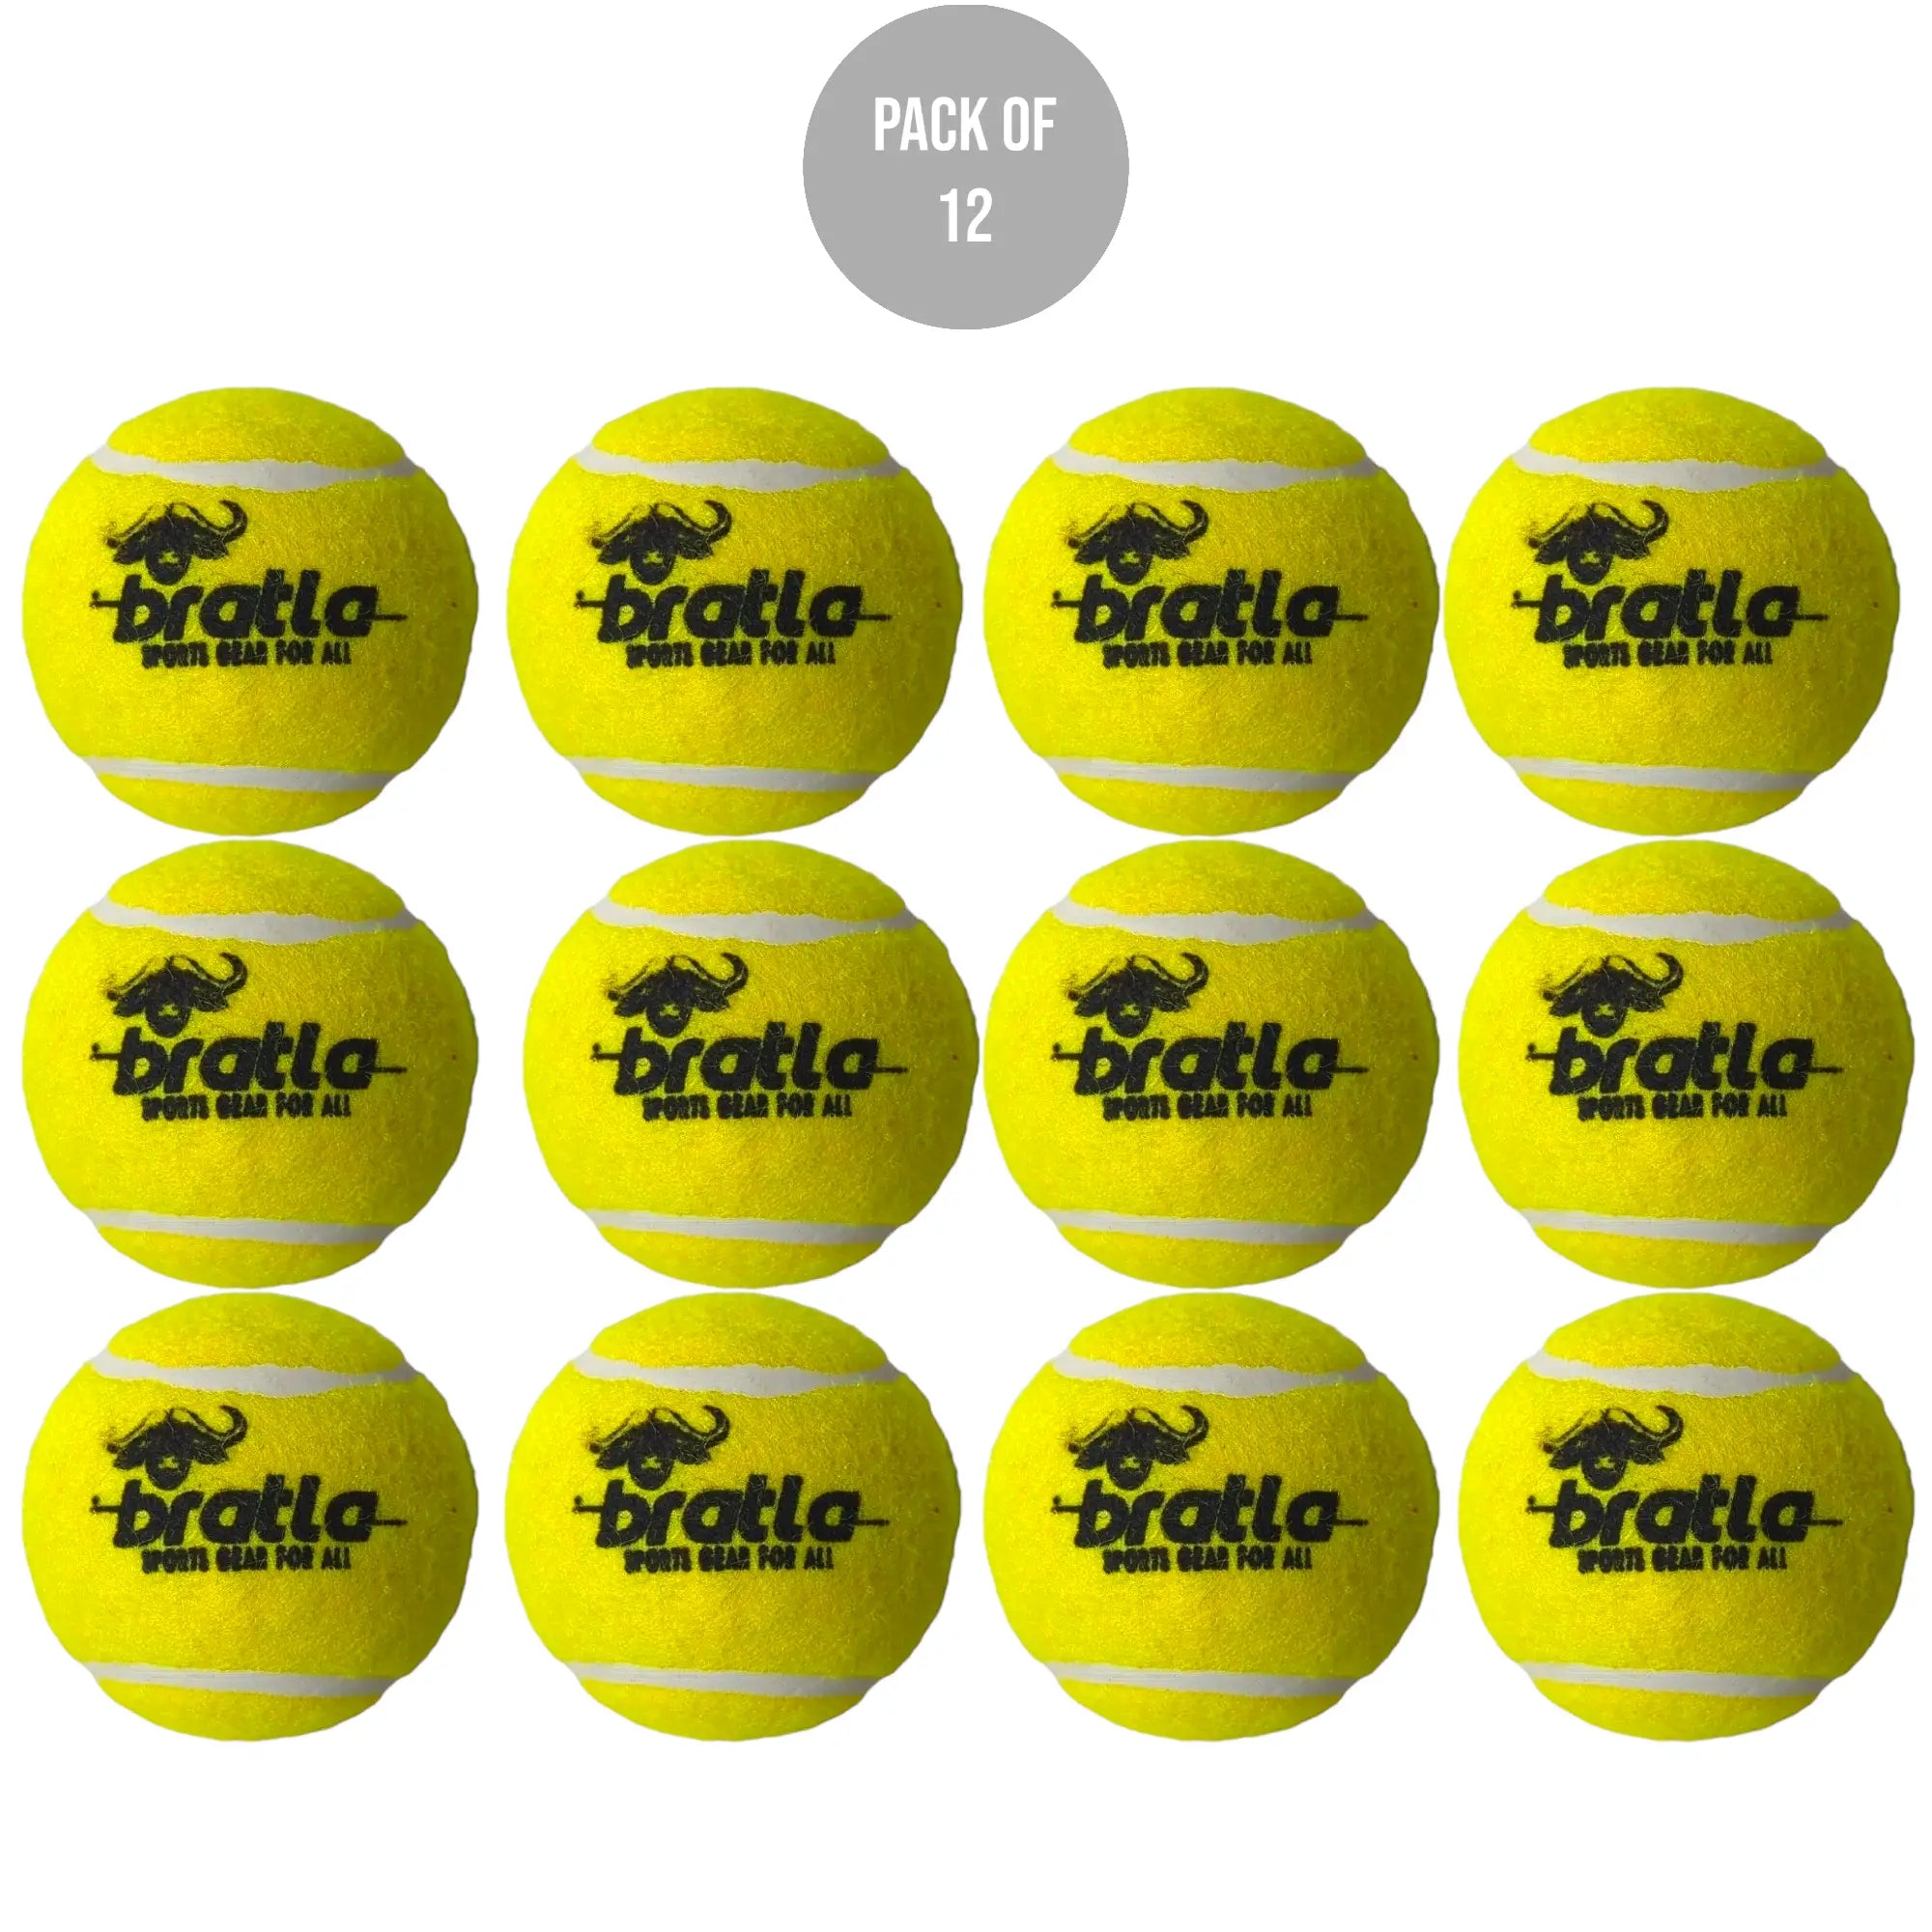 Bratla Pro Cricket Tennis Tape Ball Pack of 3 Lightweight - Pack of 12 - BALL - SOFTBALL